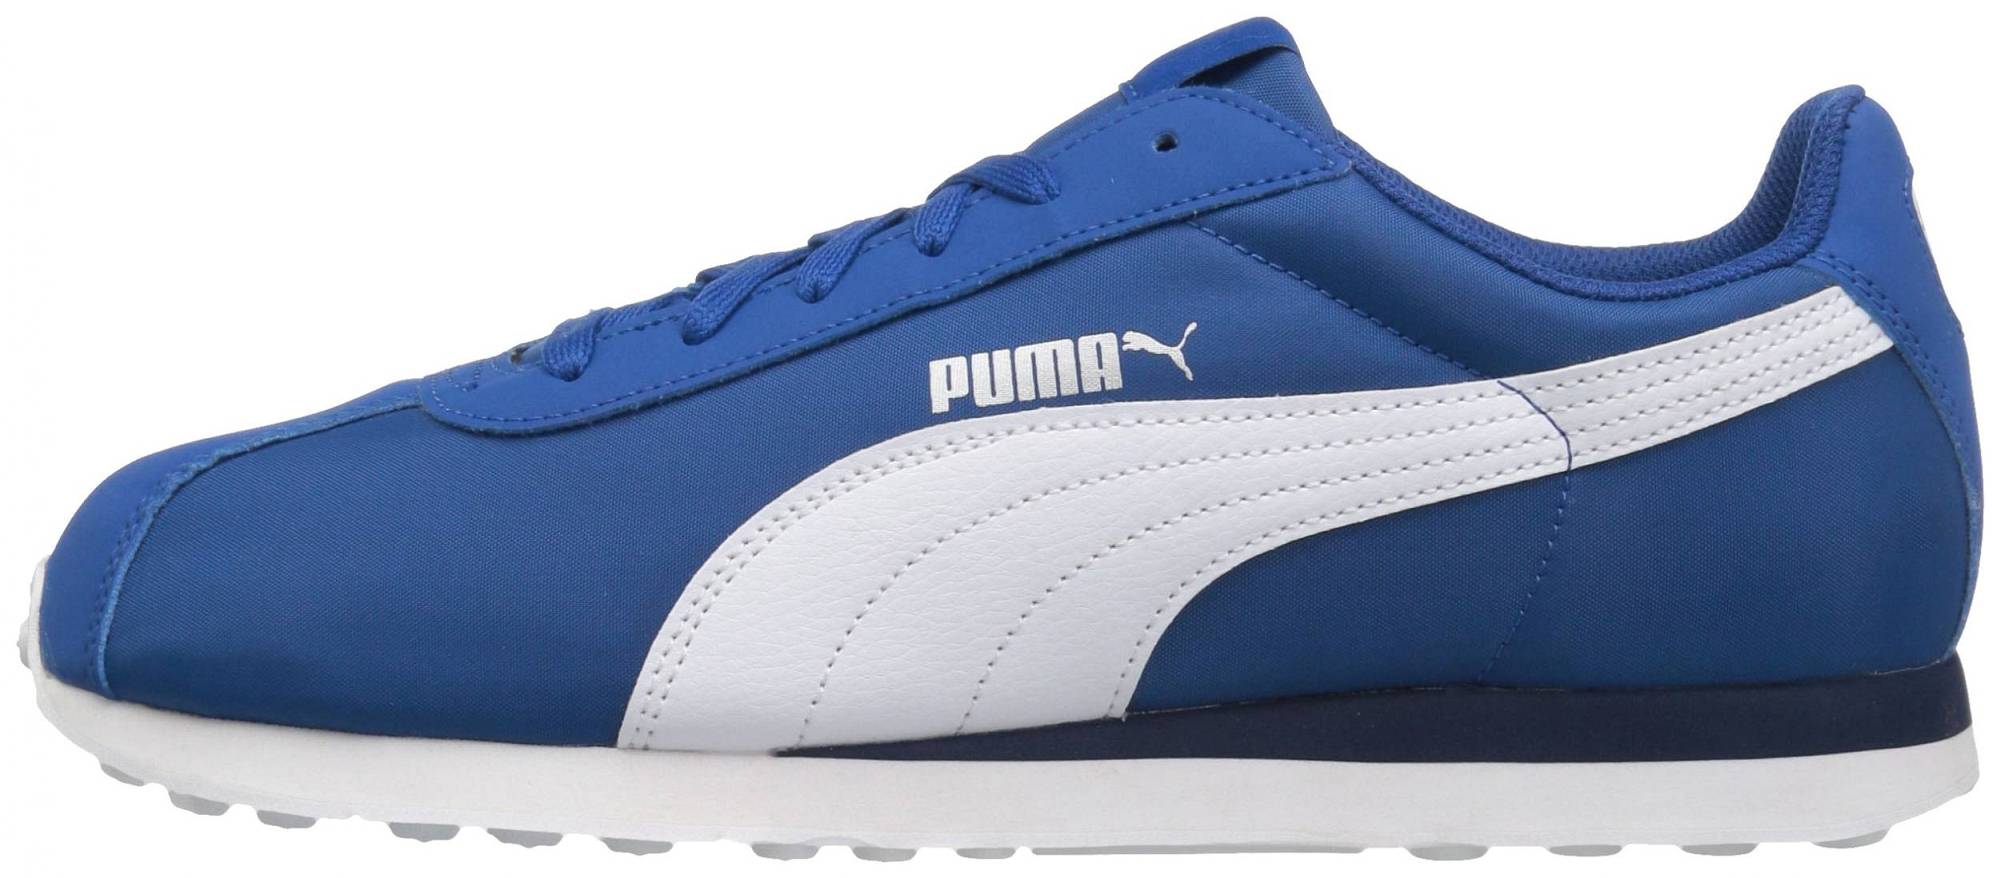 Puma Turin Nylon – Shoes Reviews & Reasons To Buy